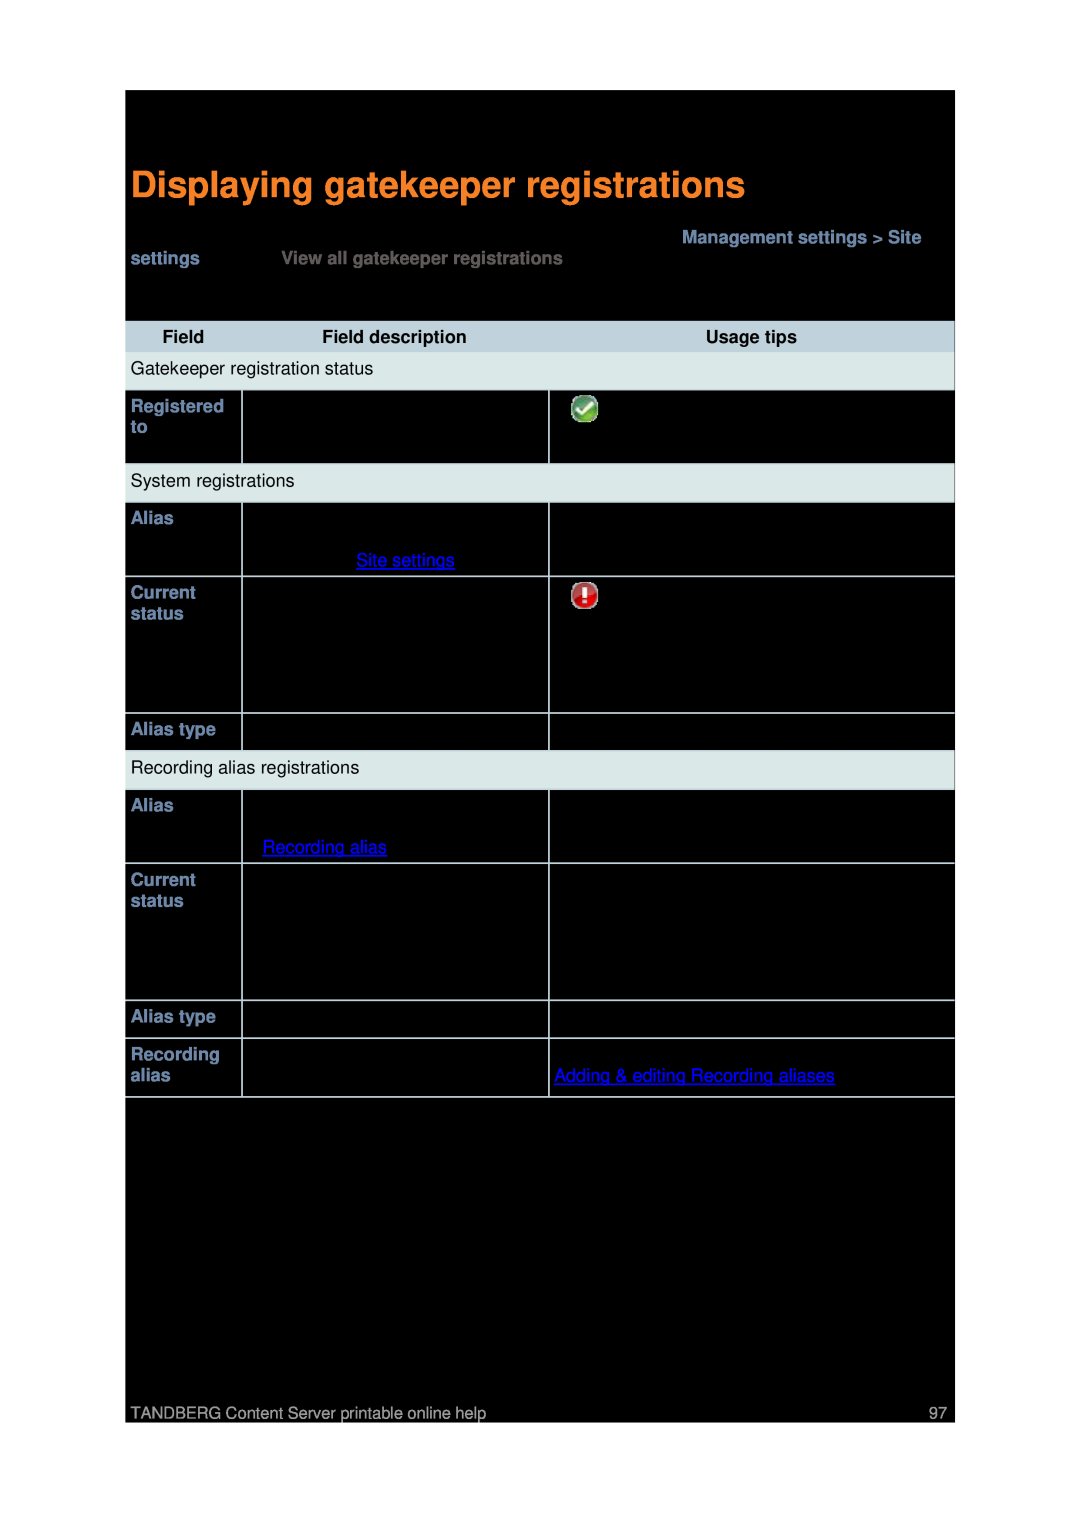 TANDBERG D1459501 manual Displaying gatekeeper registrations, Field description, Usage tips, a Recording alias 